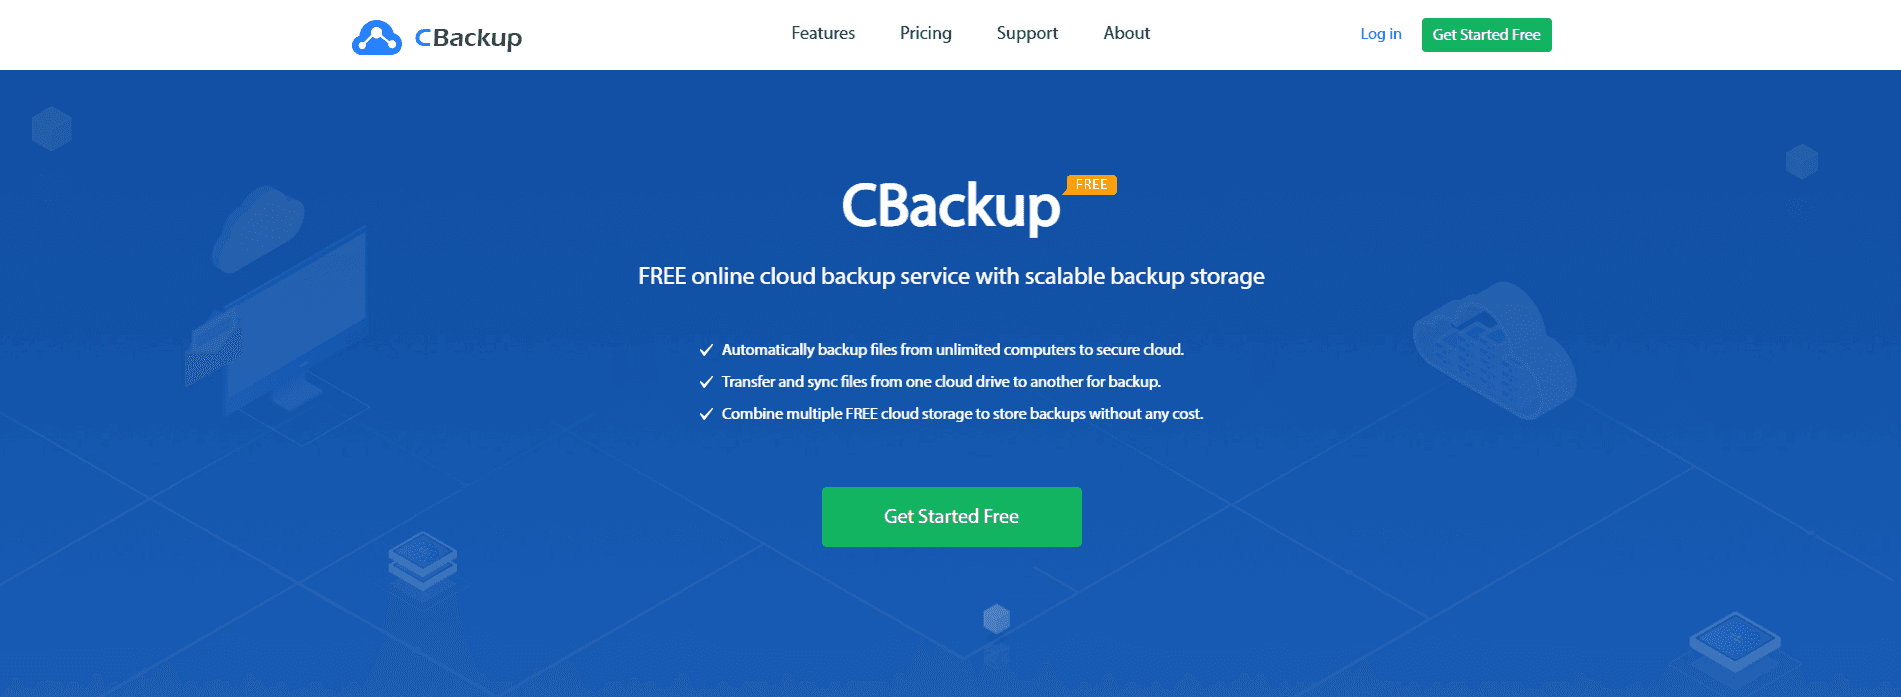 CBackup Main Page